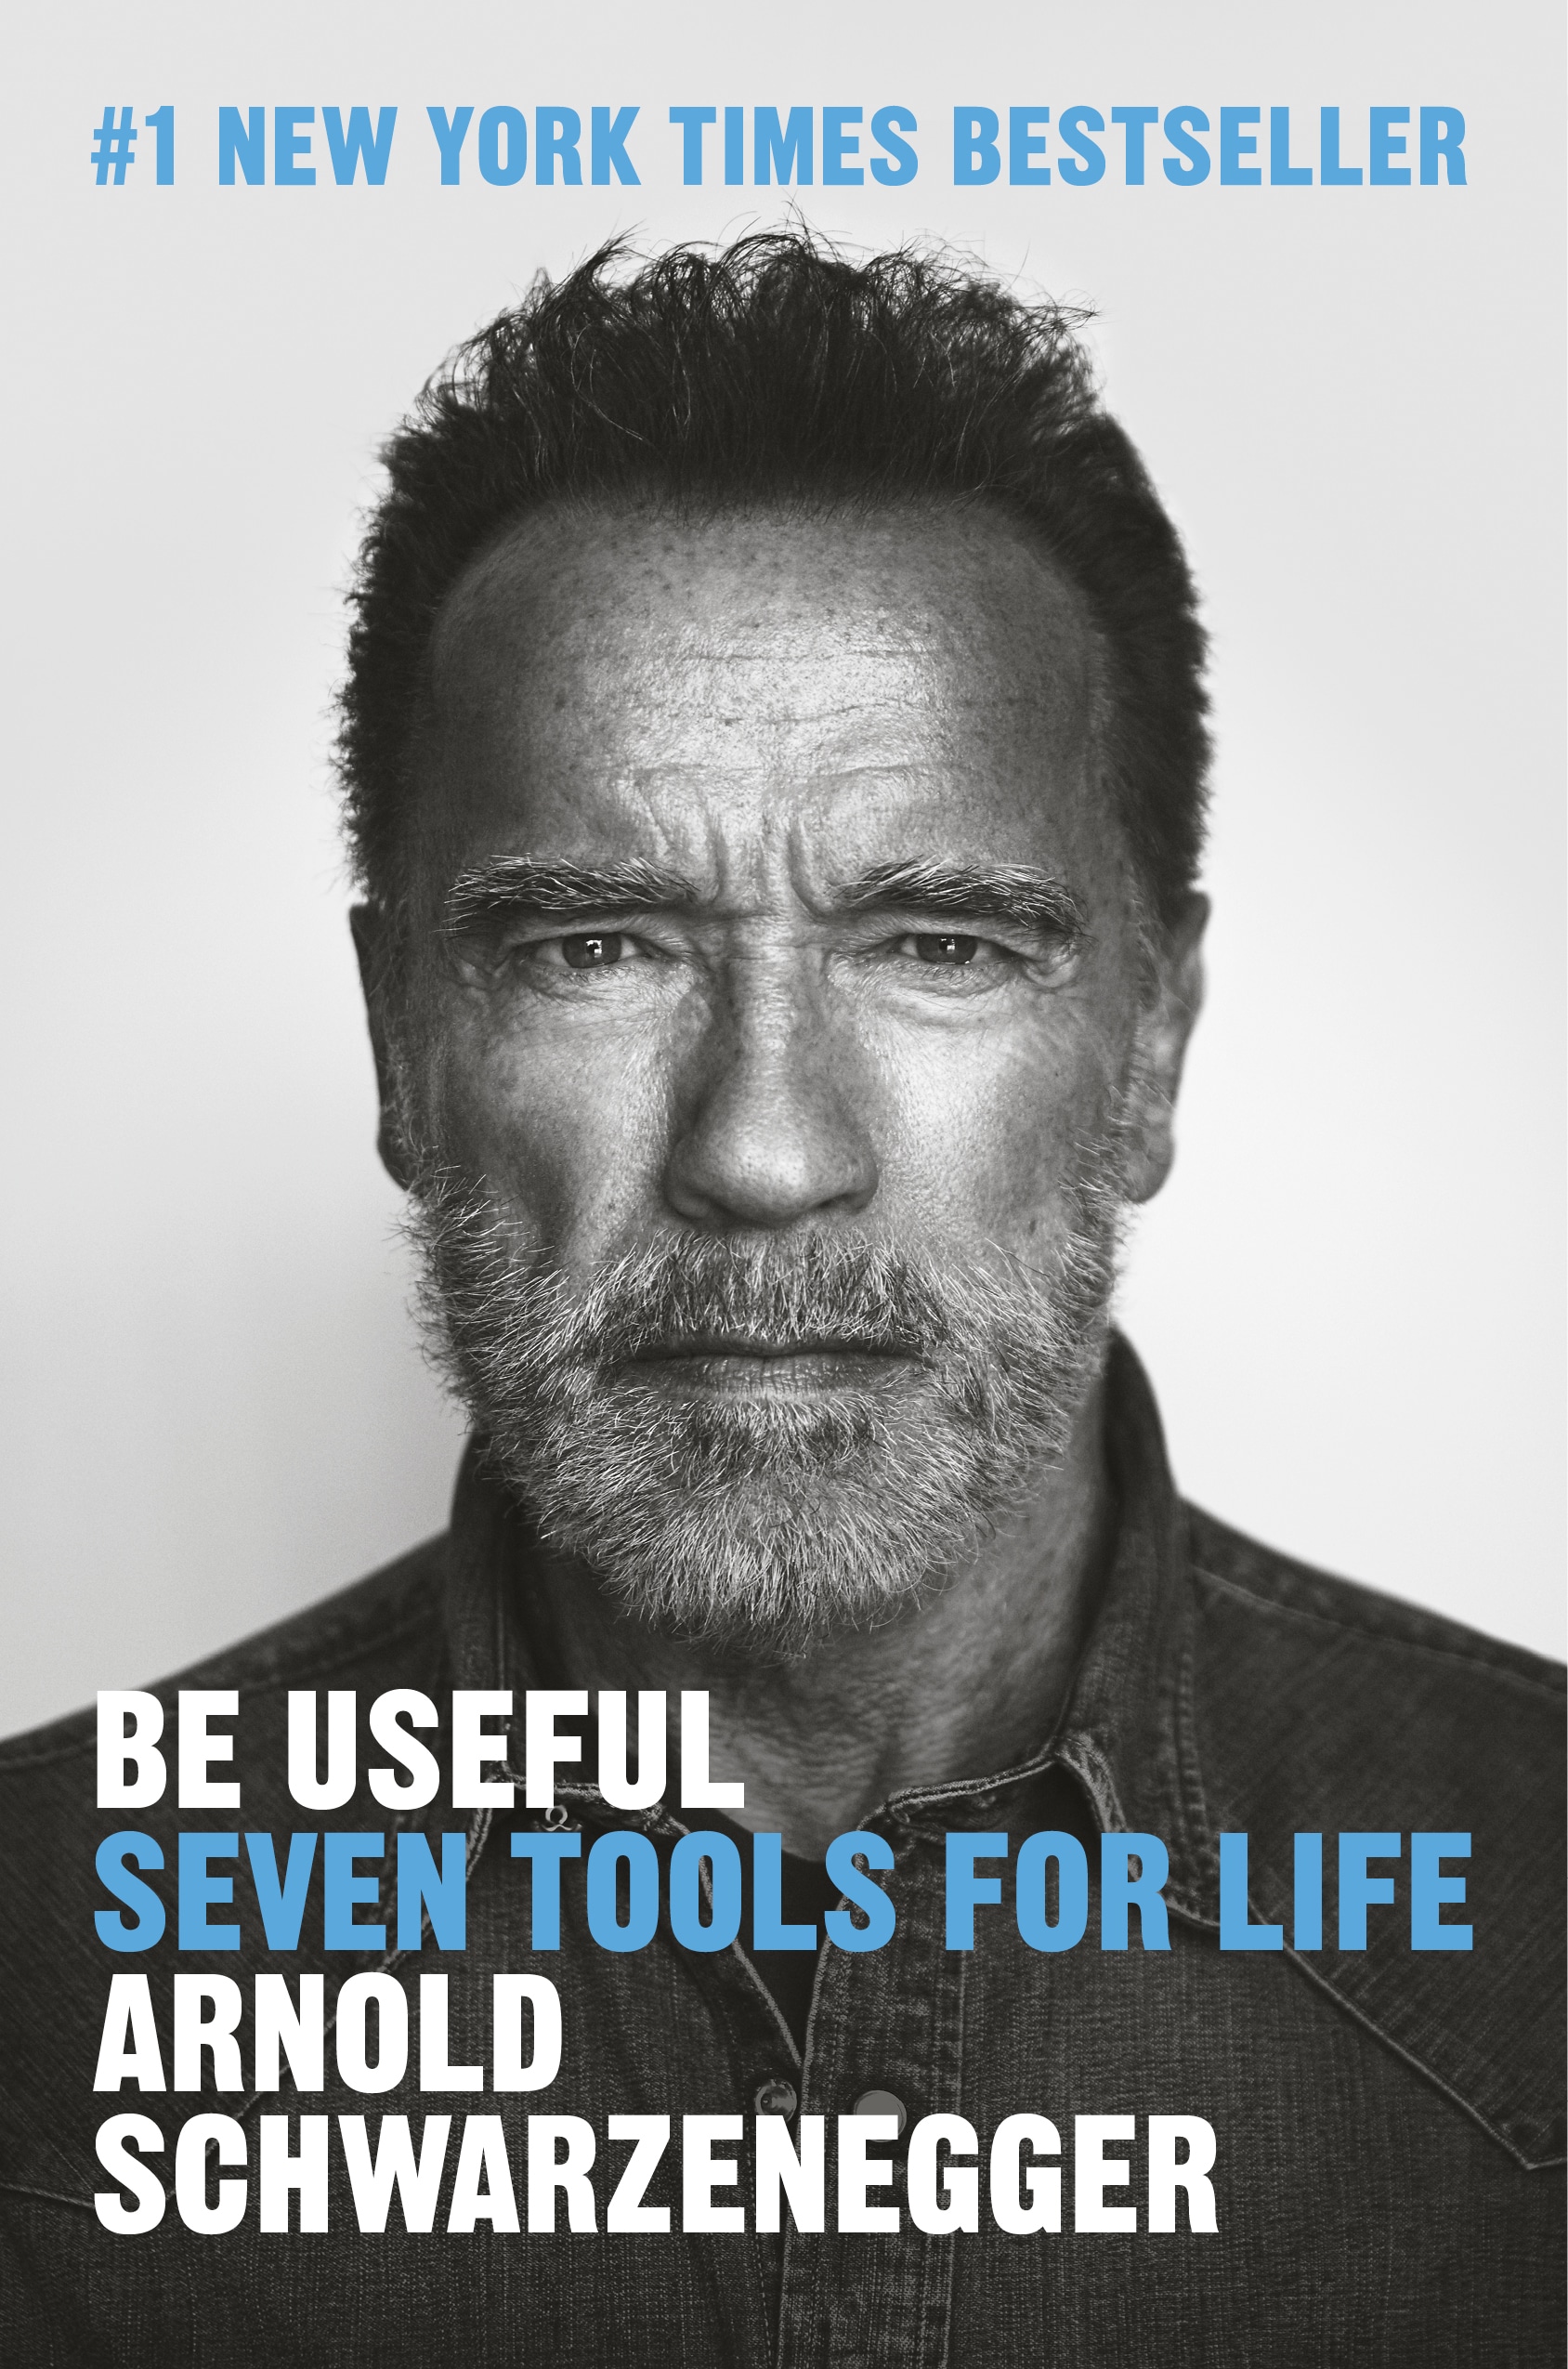 Book “Be Useful” by Arnold Schwarzenegger — October 10, 2023